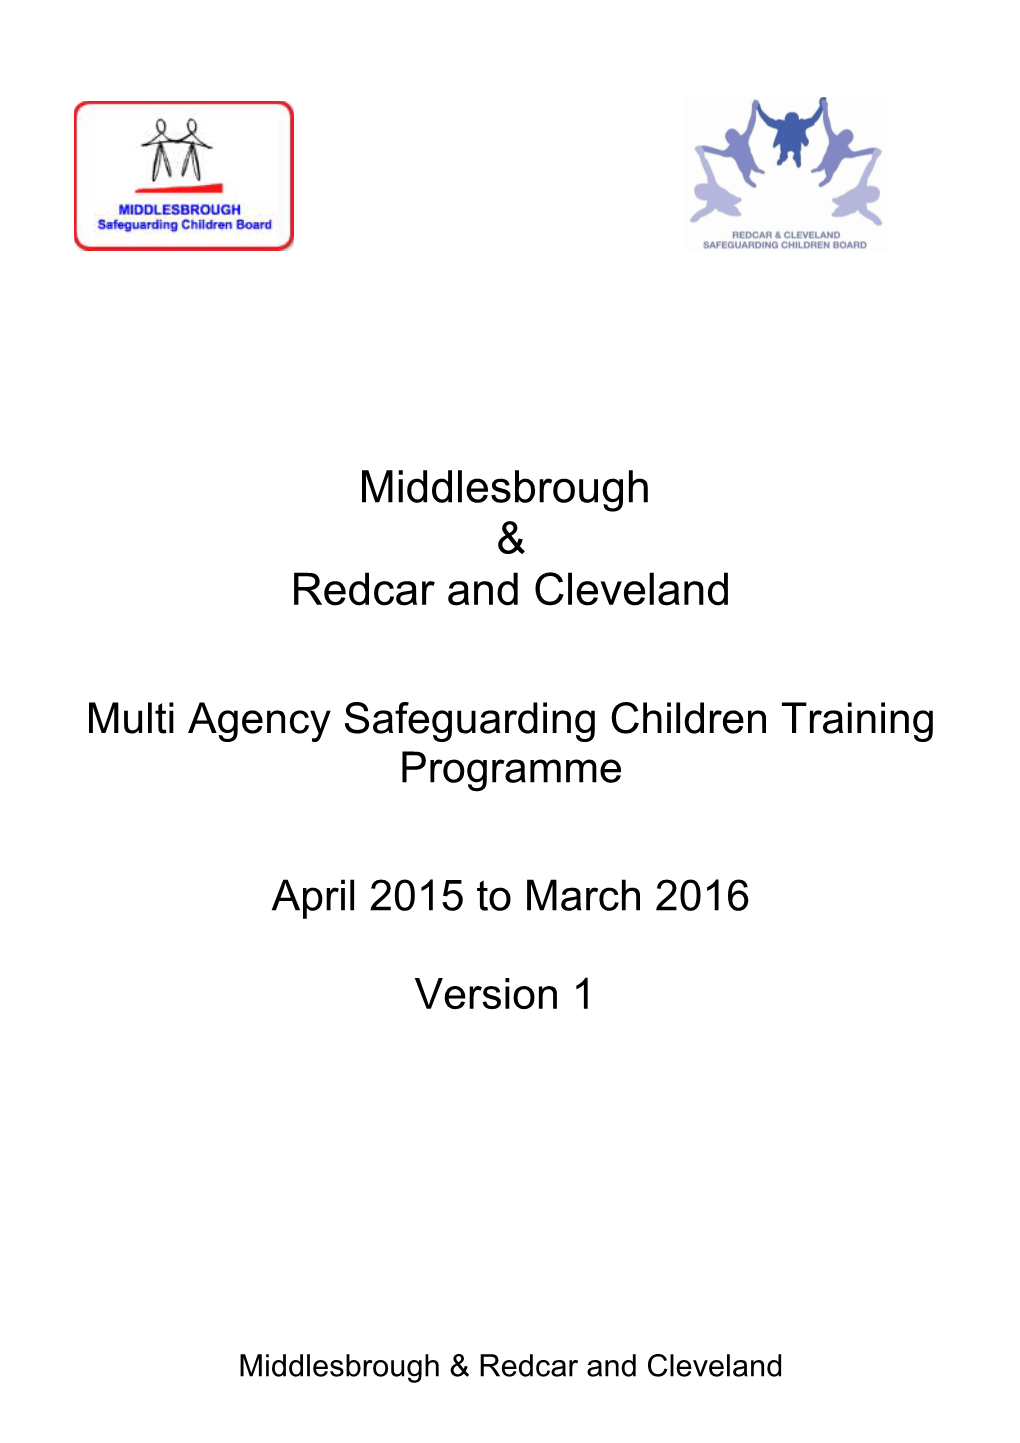 Middlesbrough Safeguarding Children Board